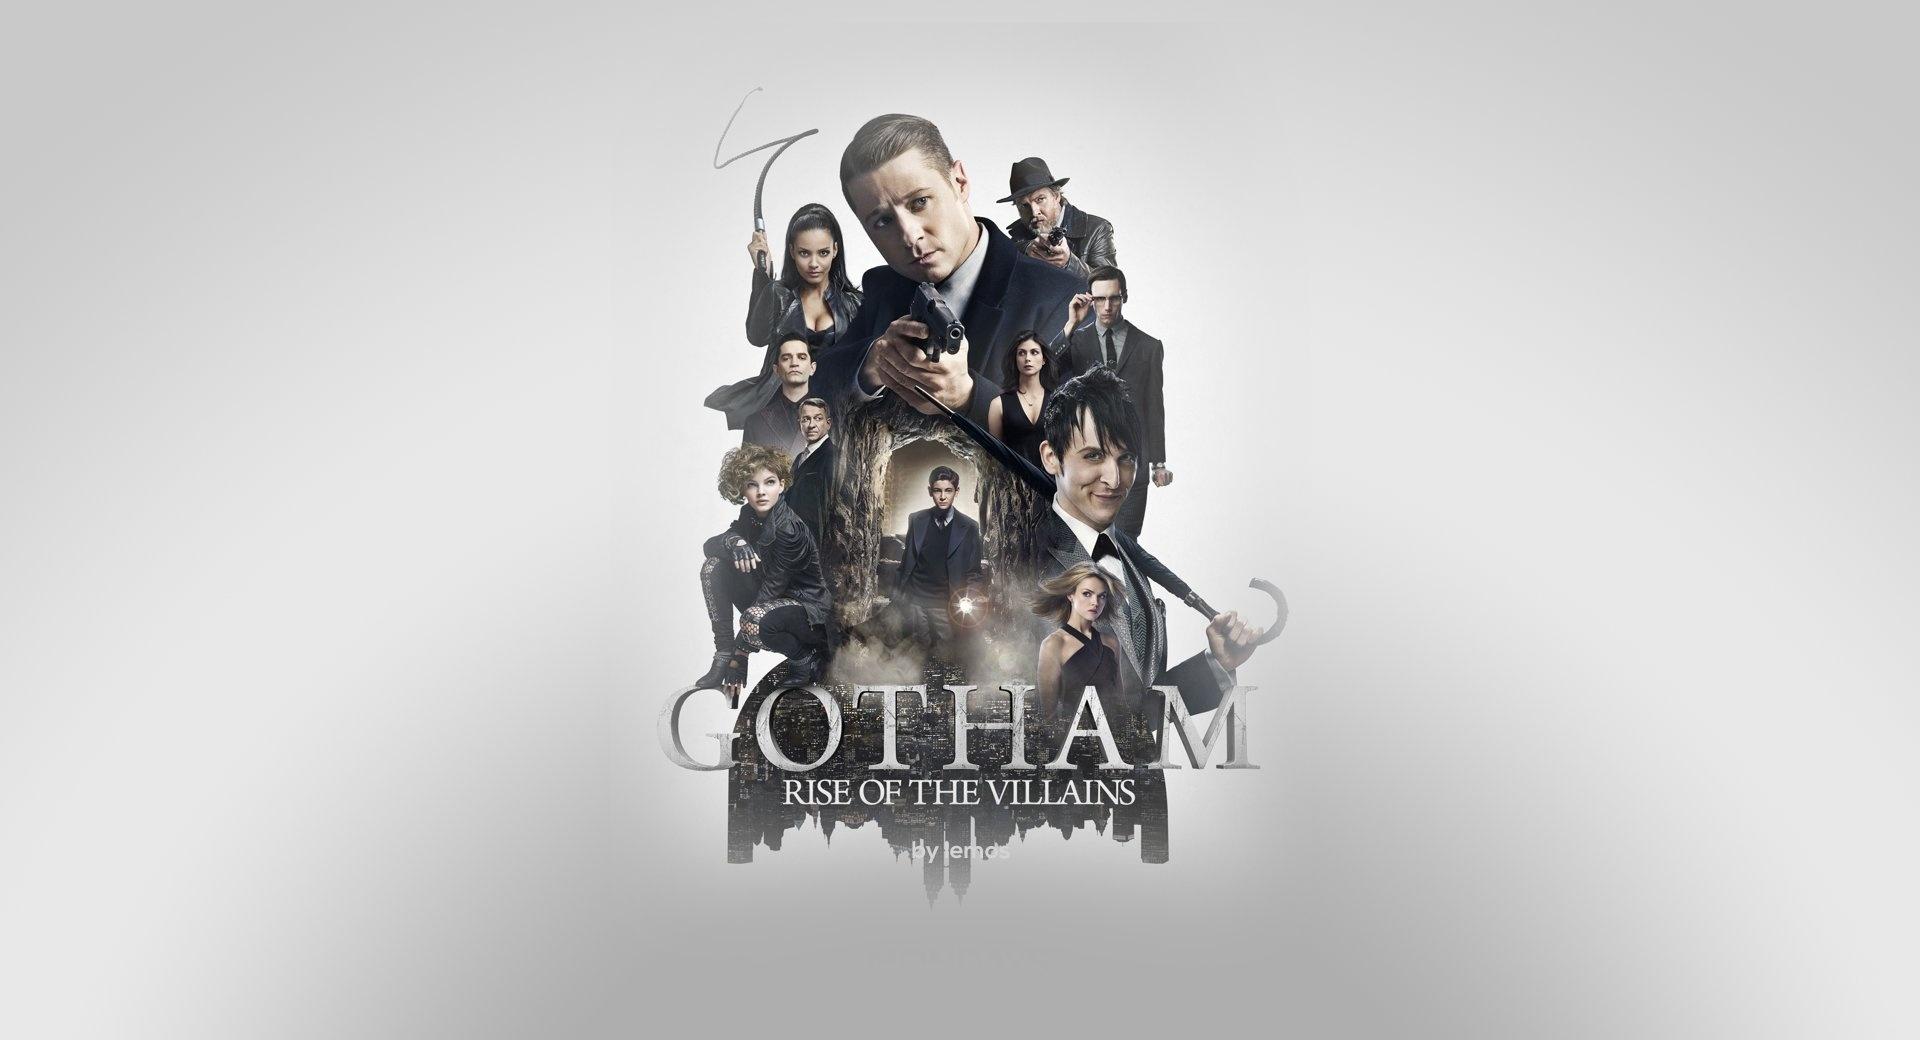 Gotham Season 2 - Poster wallpapers HD quality